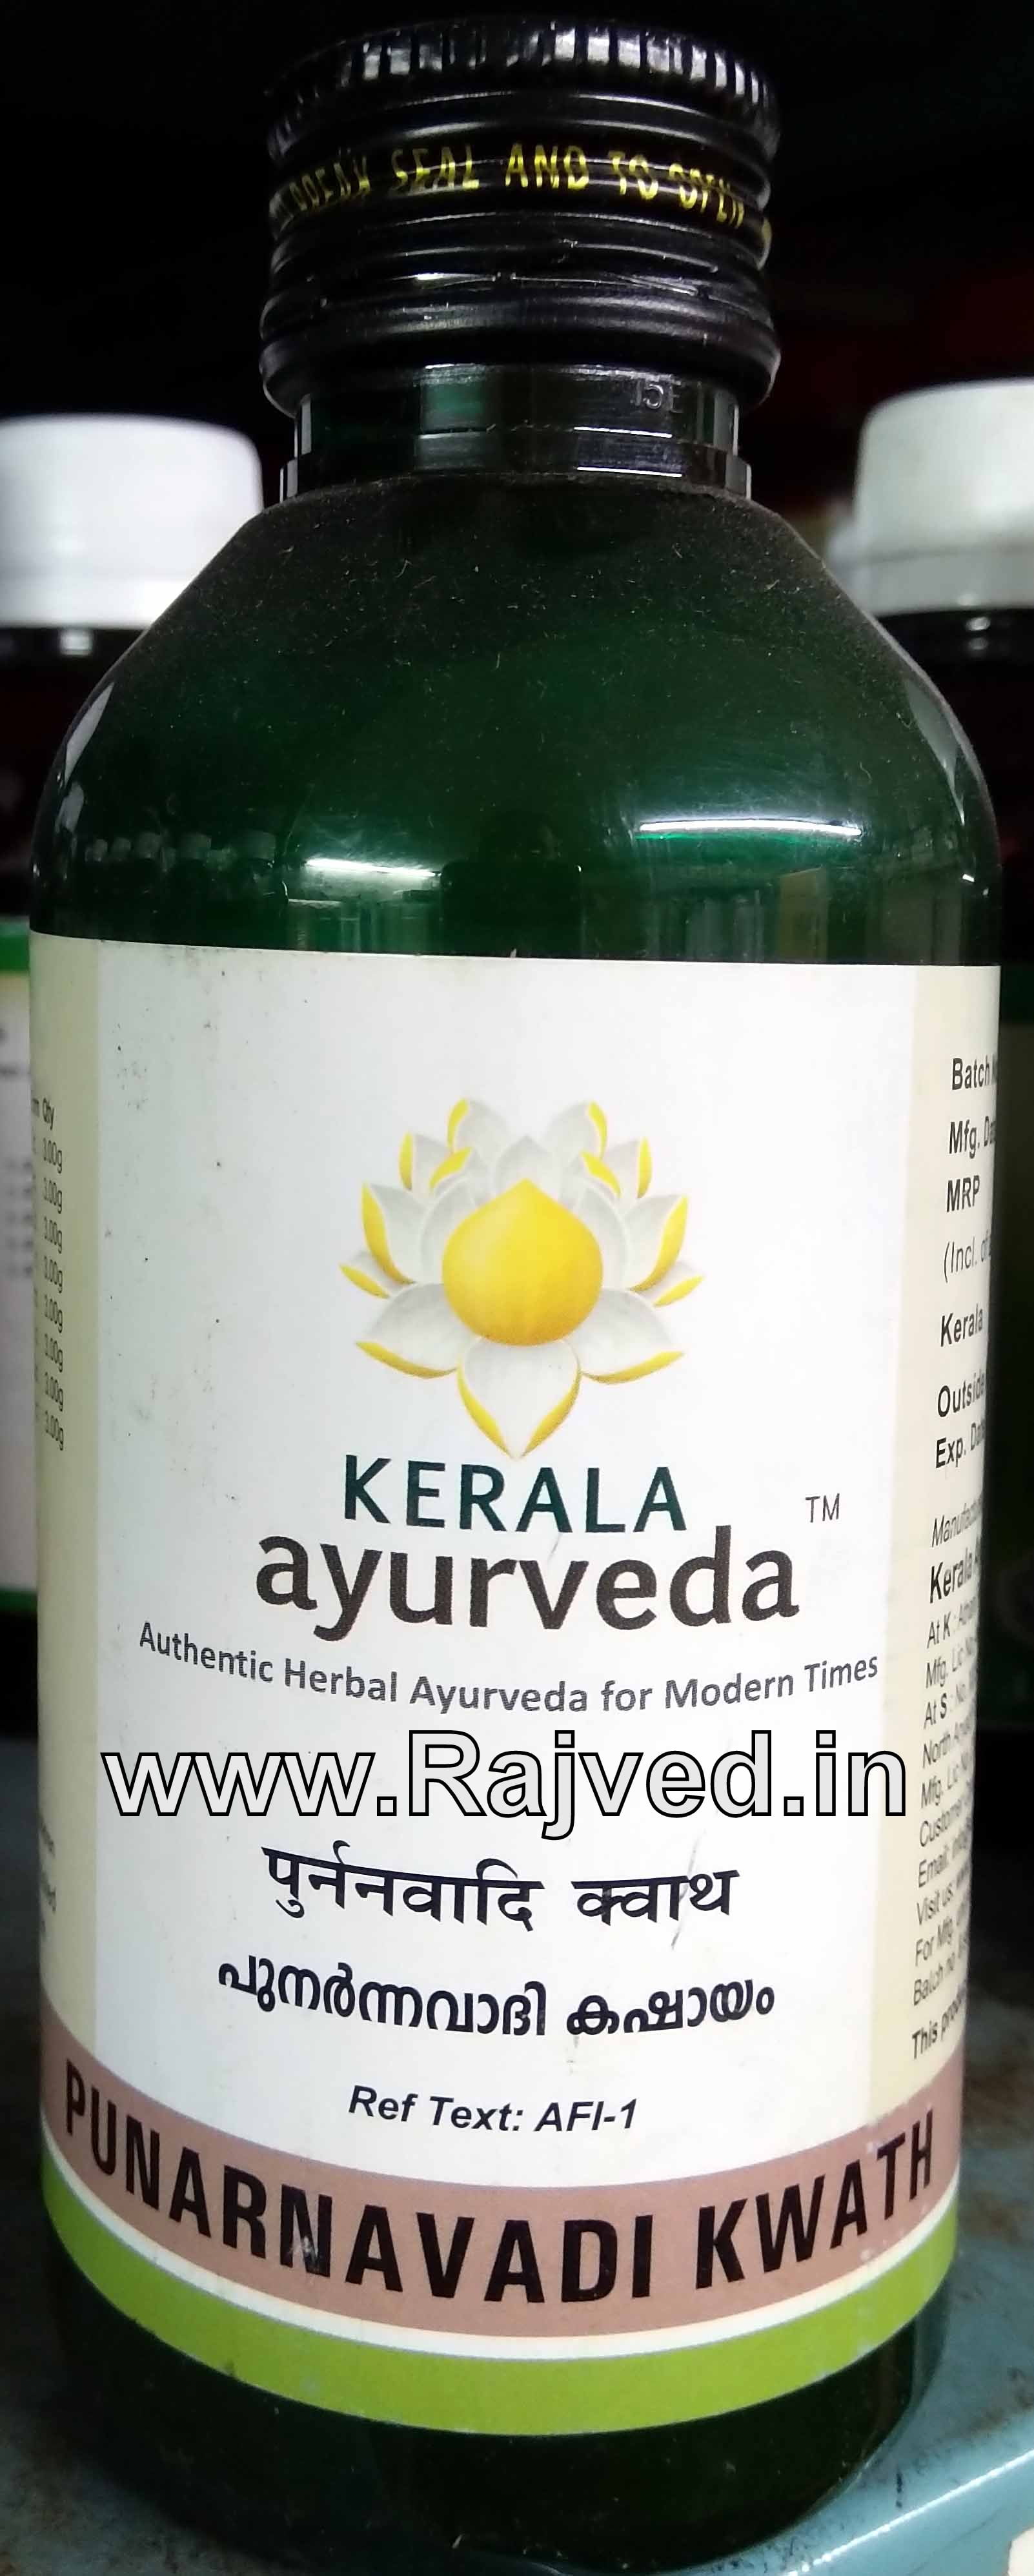 punarnavadi kwath 200 ml kerala ayurveda Ltd